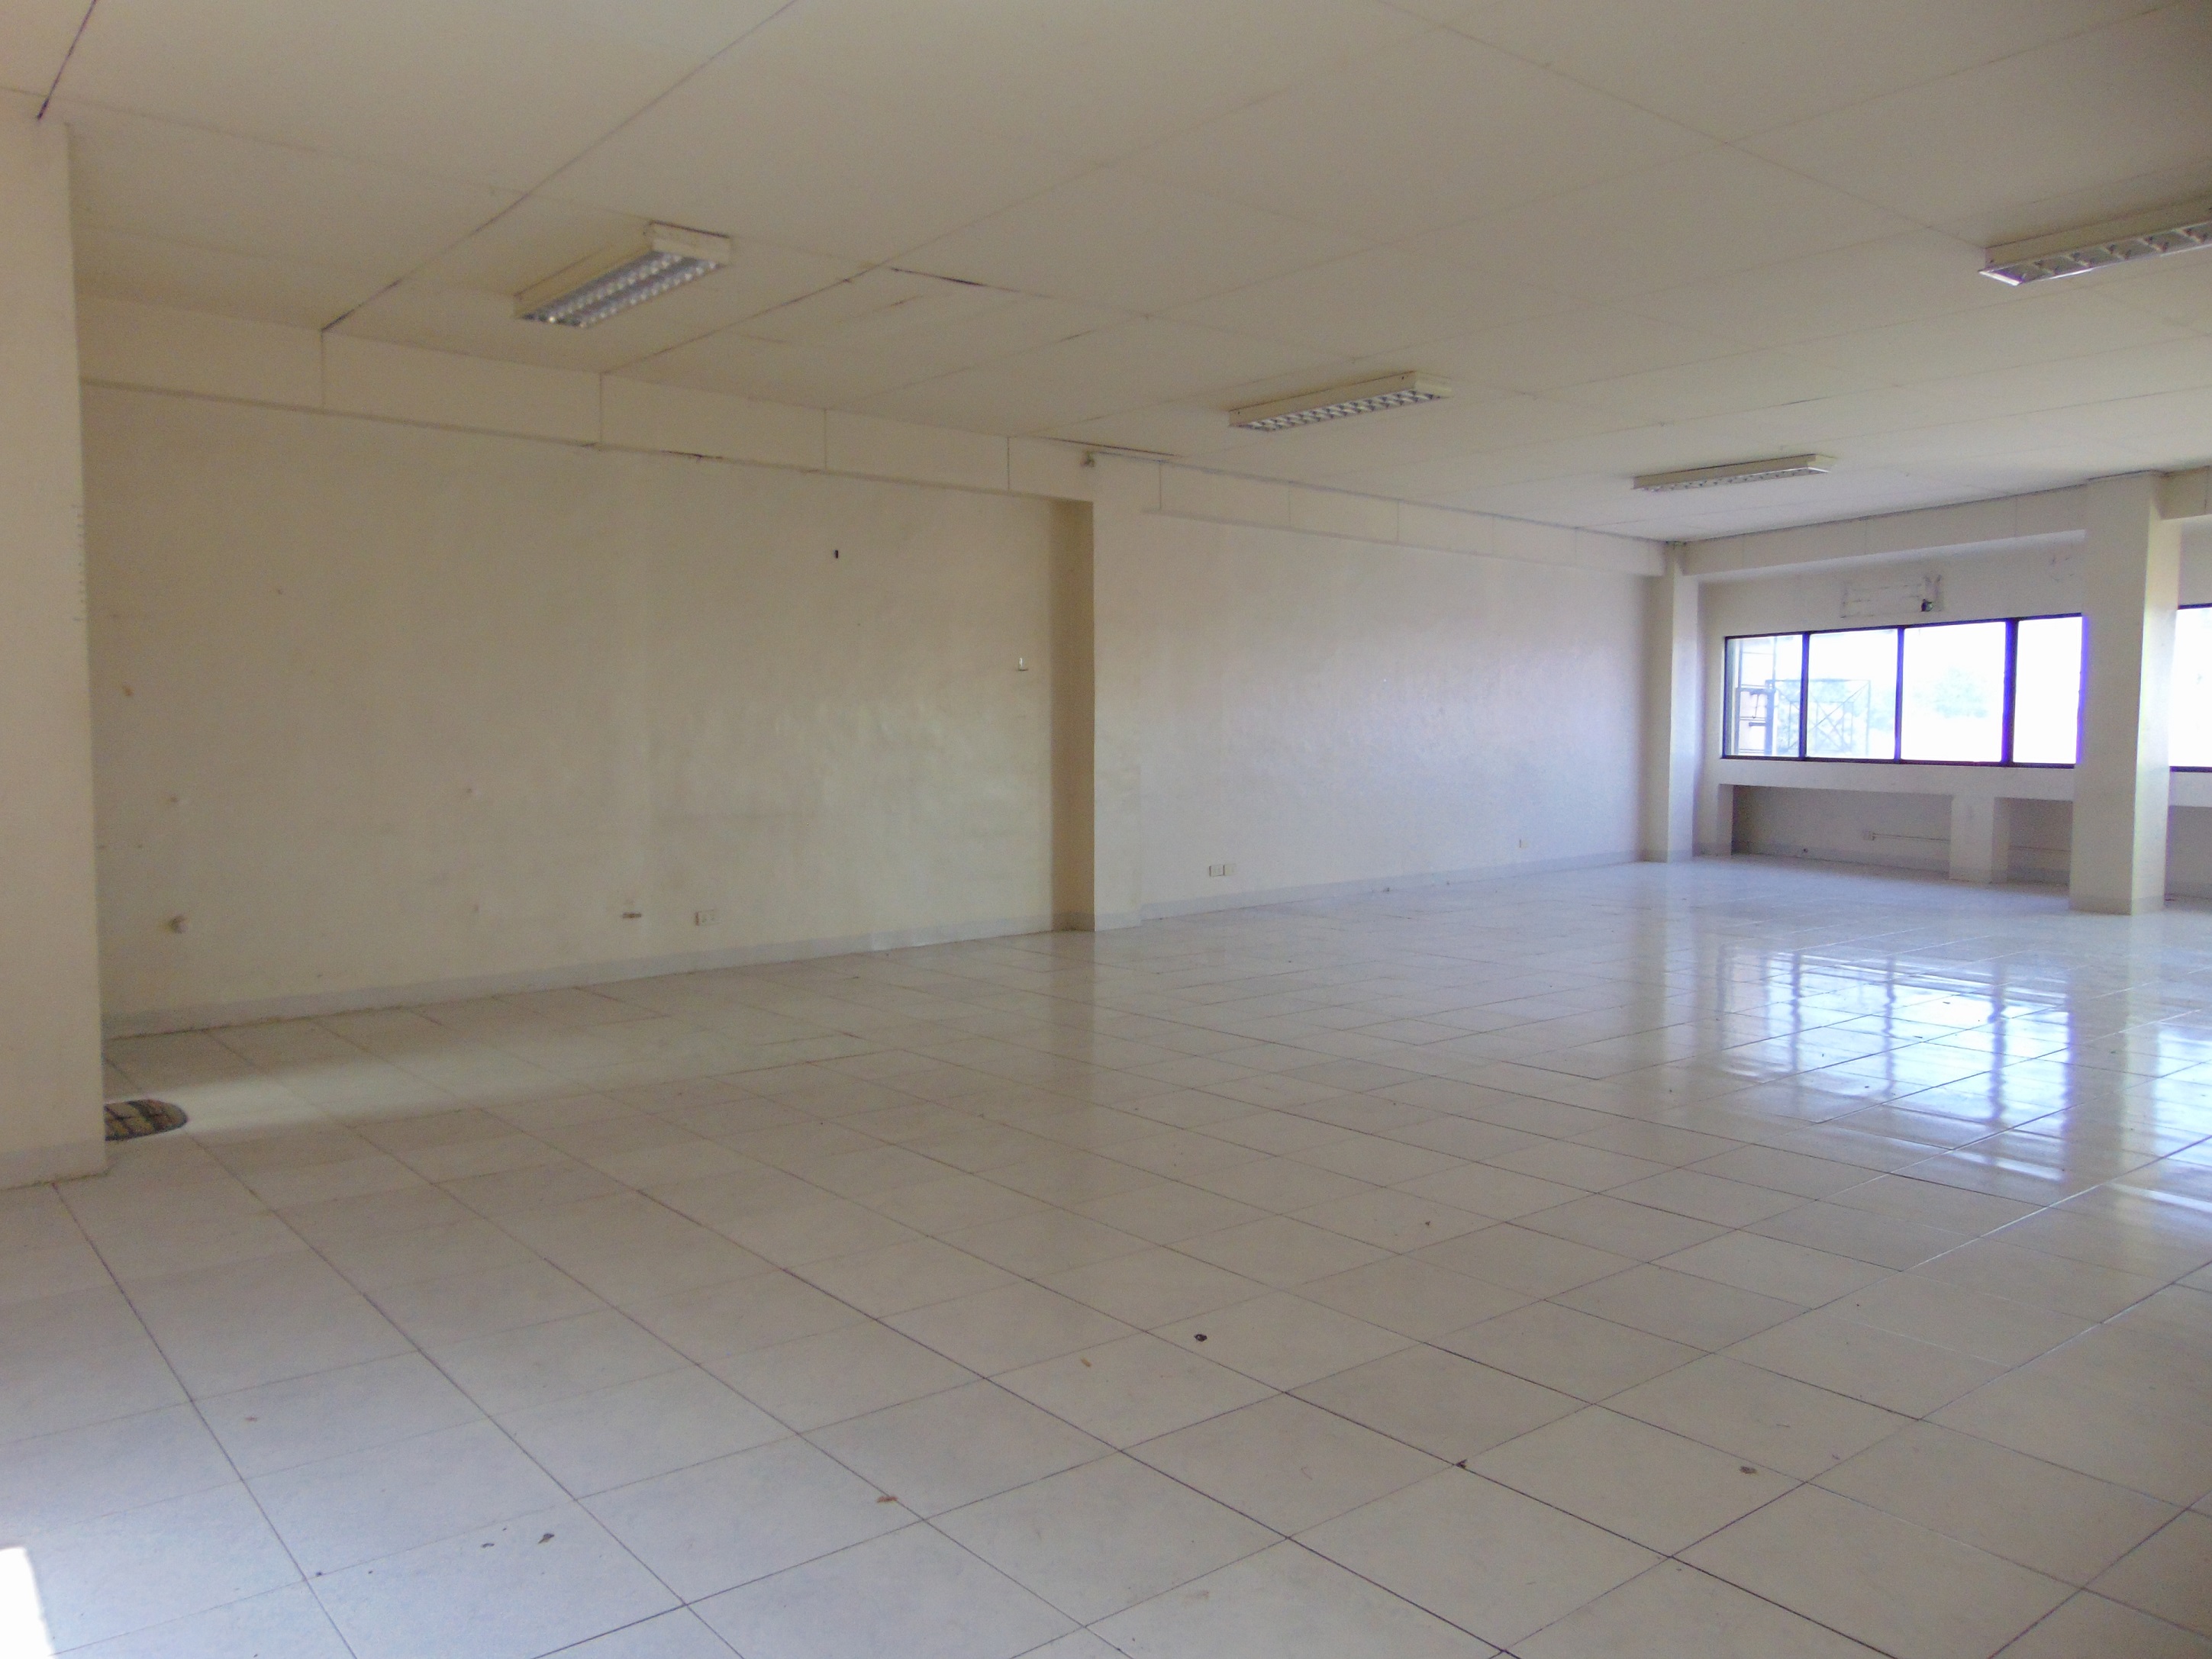 115-square-meters-office-space-located-in-mandaue-city-cebu